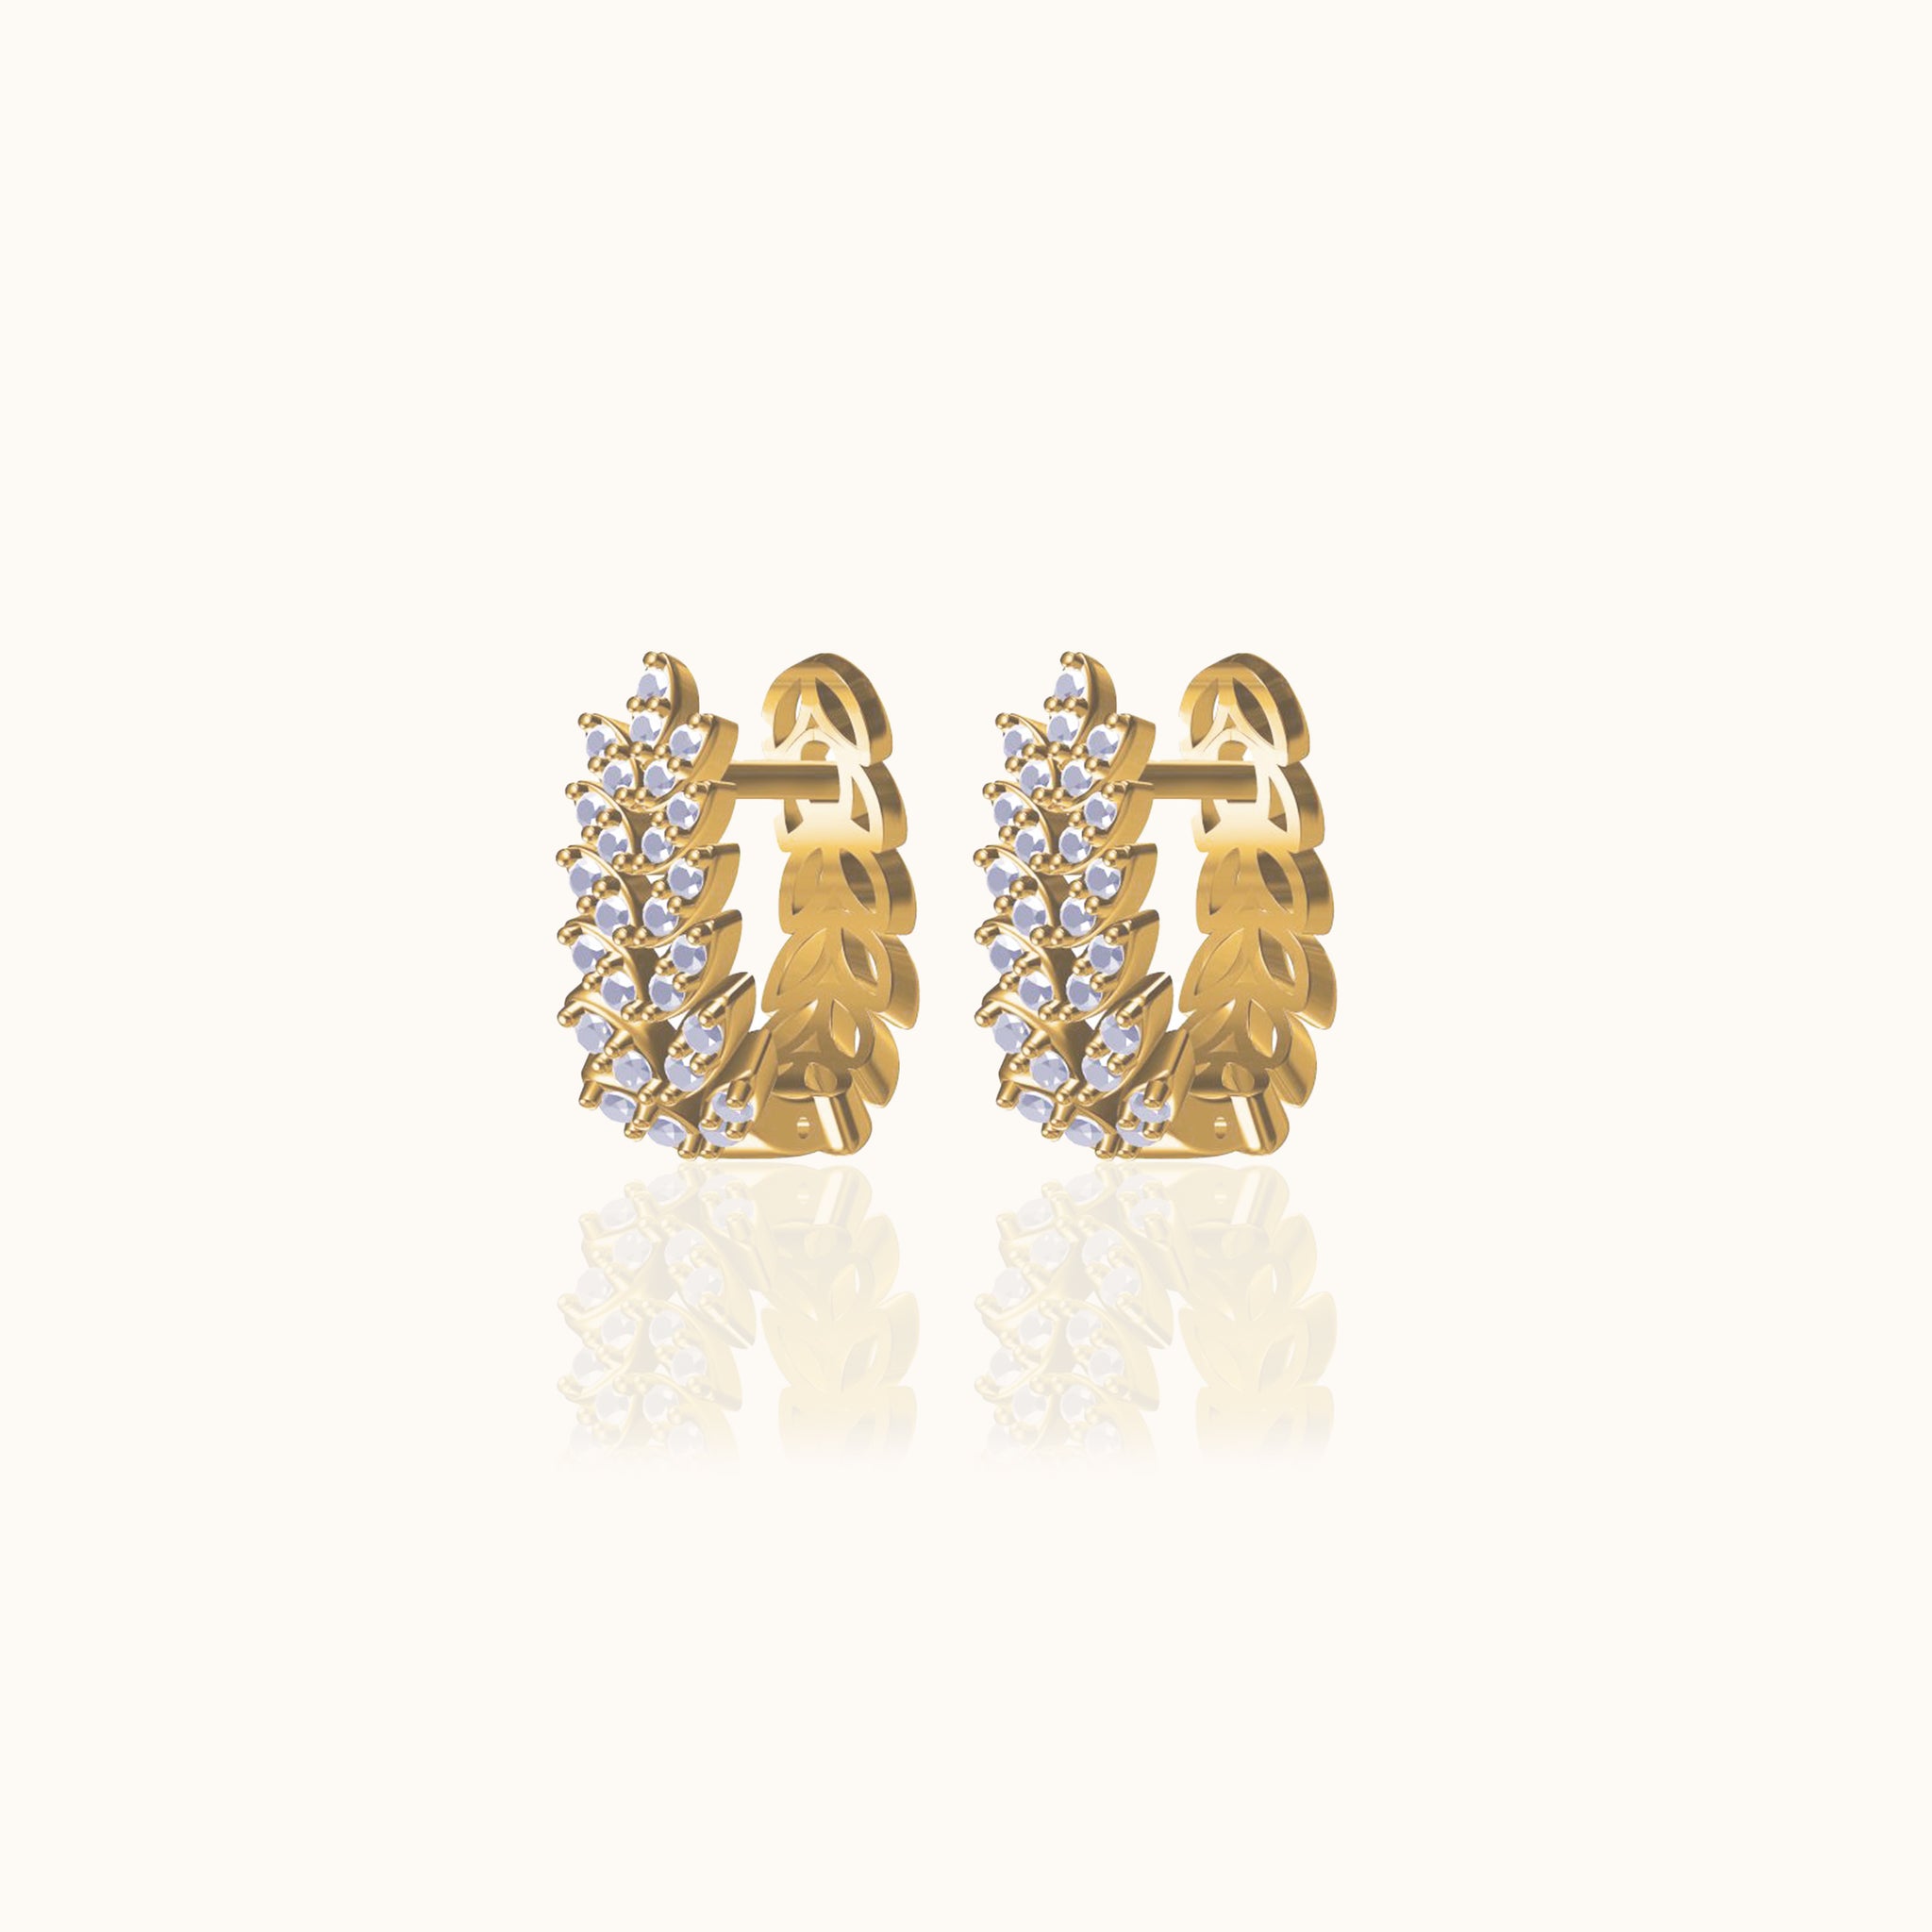 Gold Wheat CZ Hoop Earrings Thick Elegant Design Chunky Huggie Hoops by Doviana